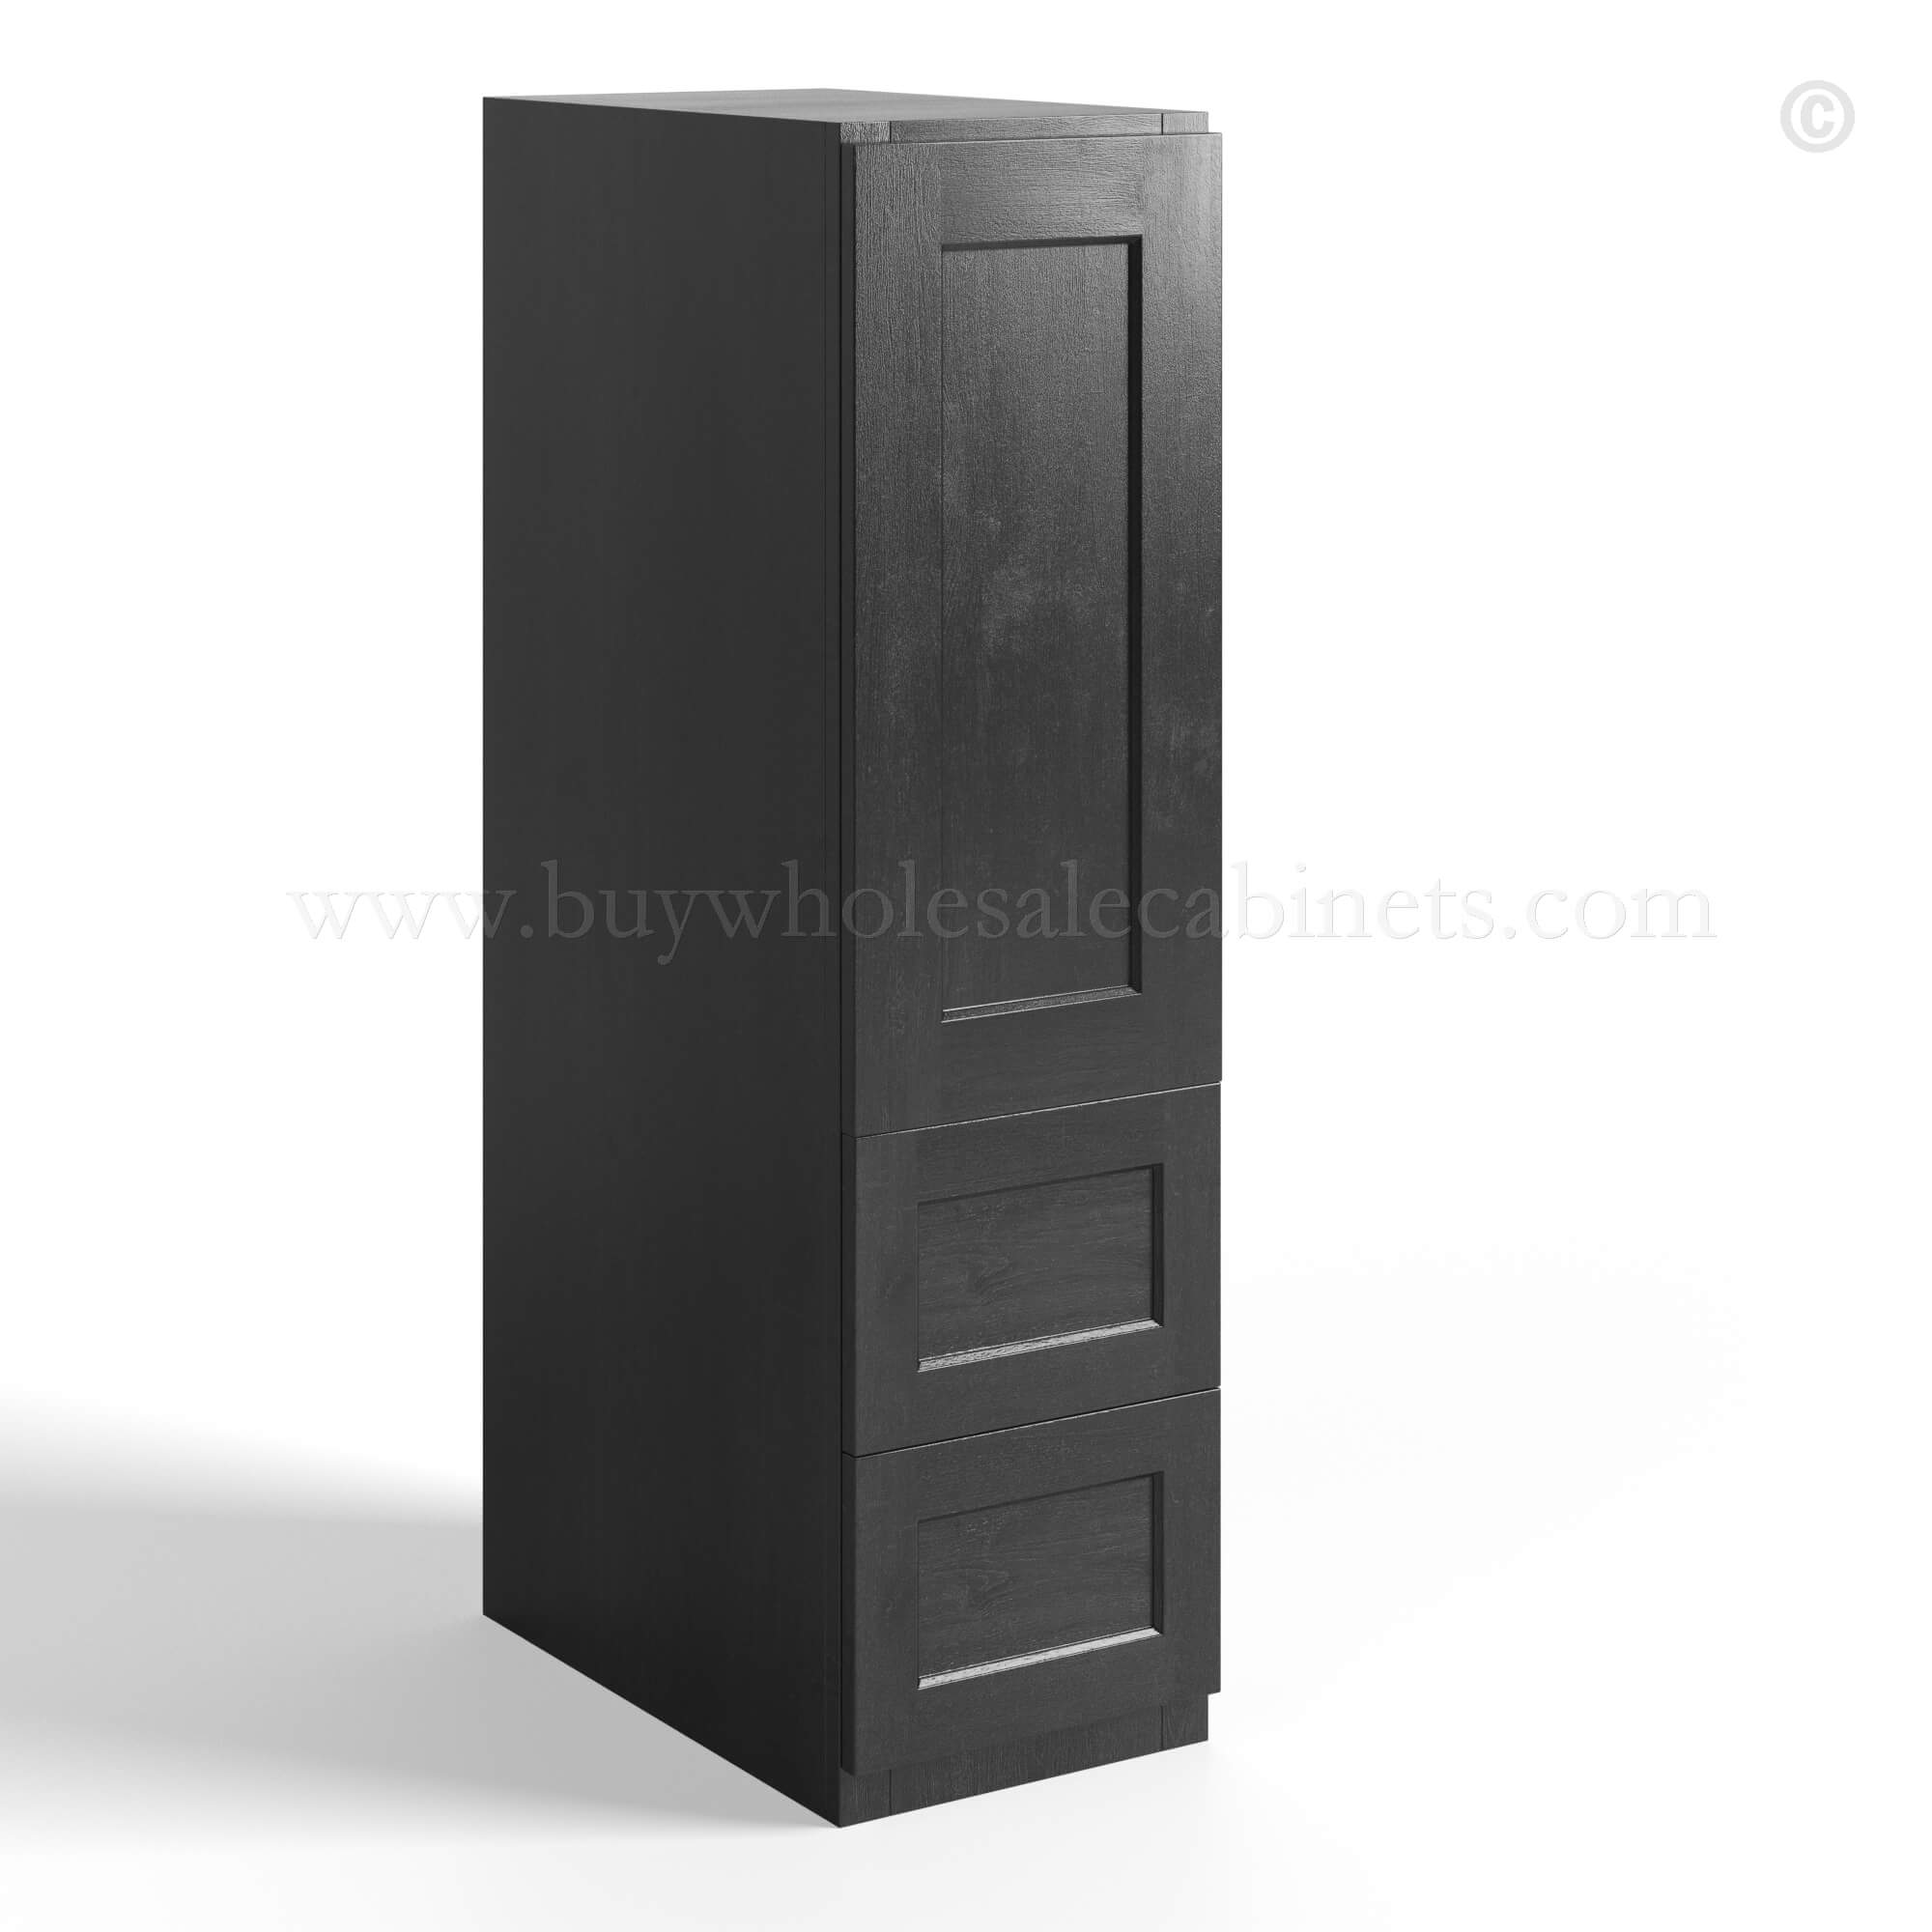 Charcoal Black Shaker Vanity Towel Cabinet, rta cabinets, wholesale cabinets